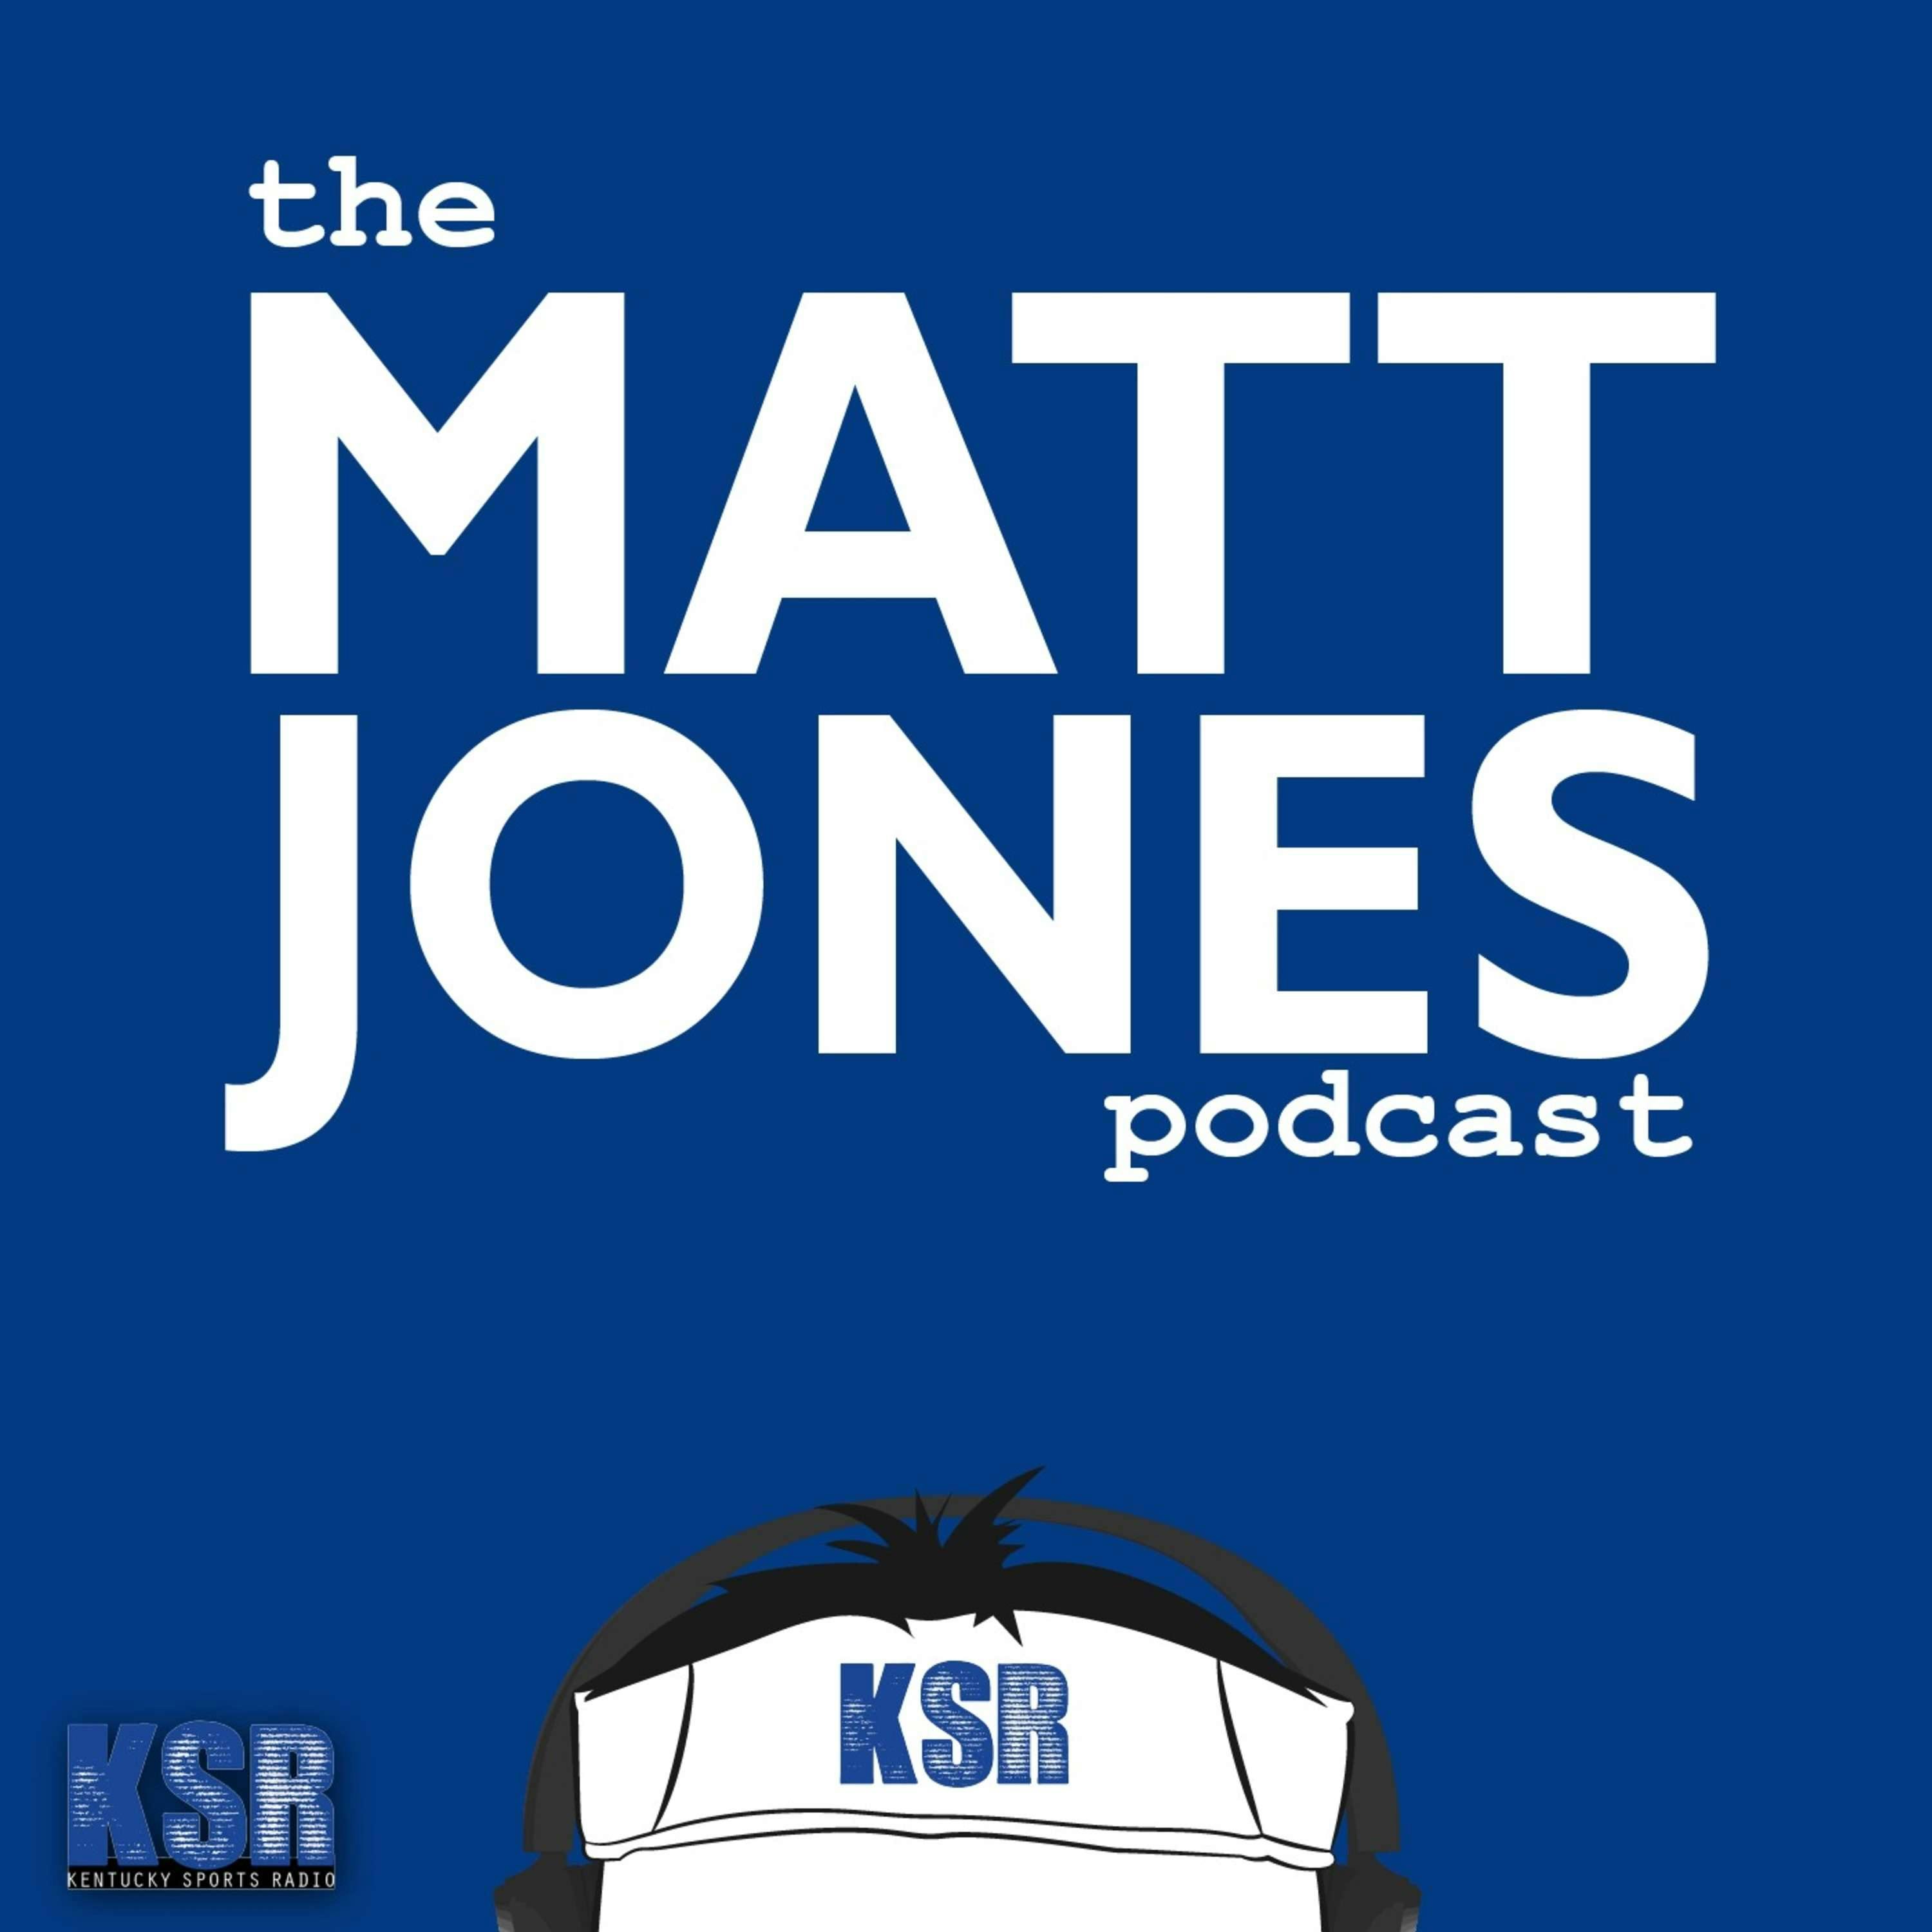 The Matt Jones Podcast: E43 Zach “Big EZ” McCrite